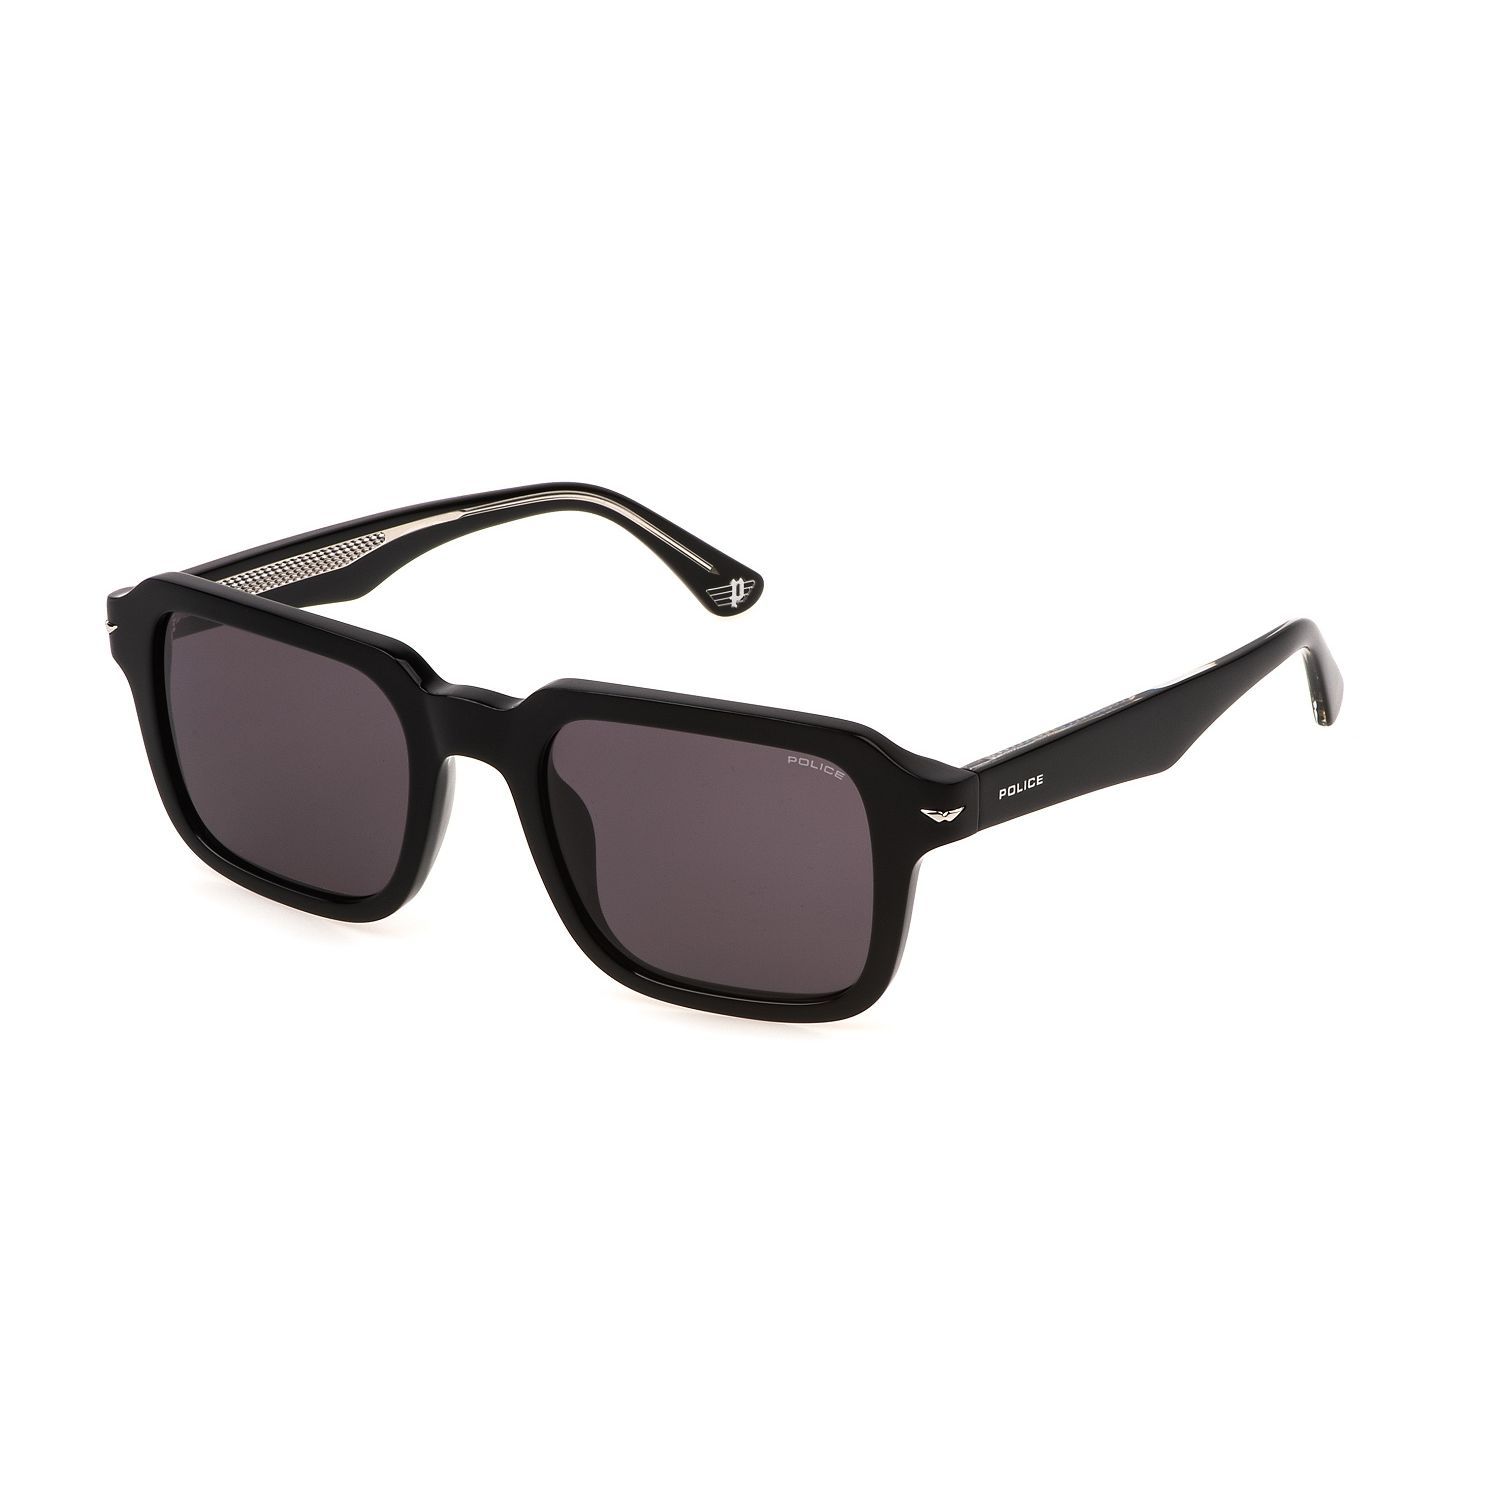 SPLN36M Square Sunglasses 700Y - size 52